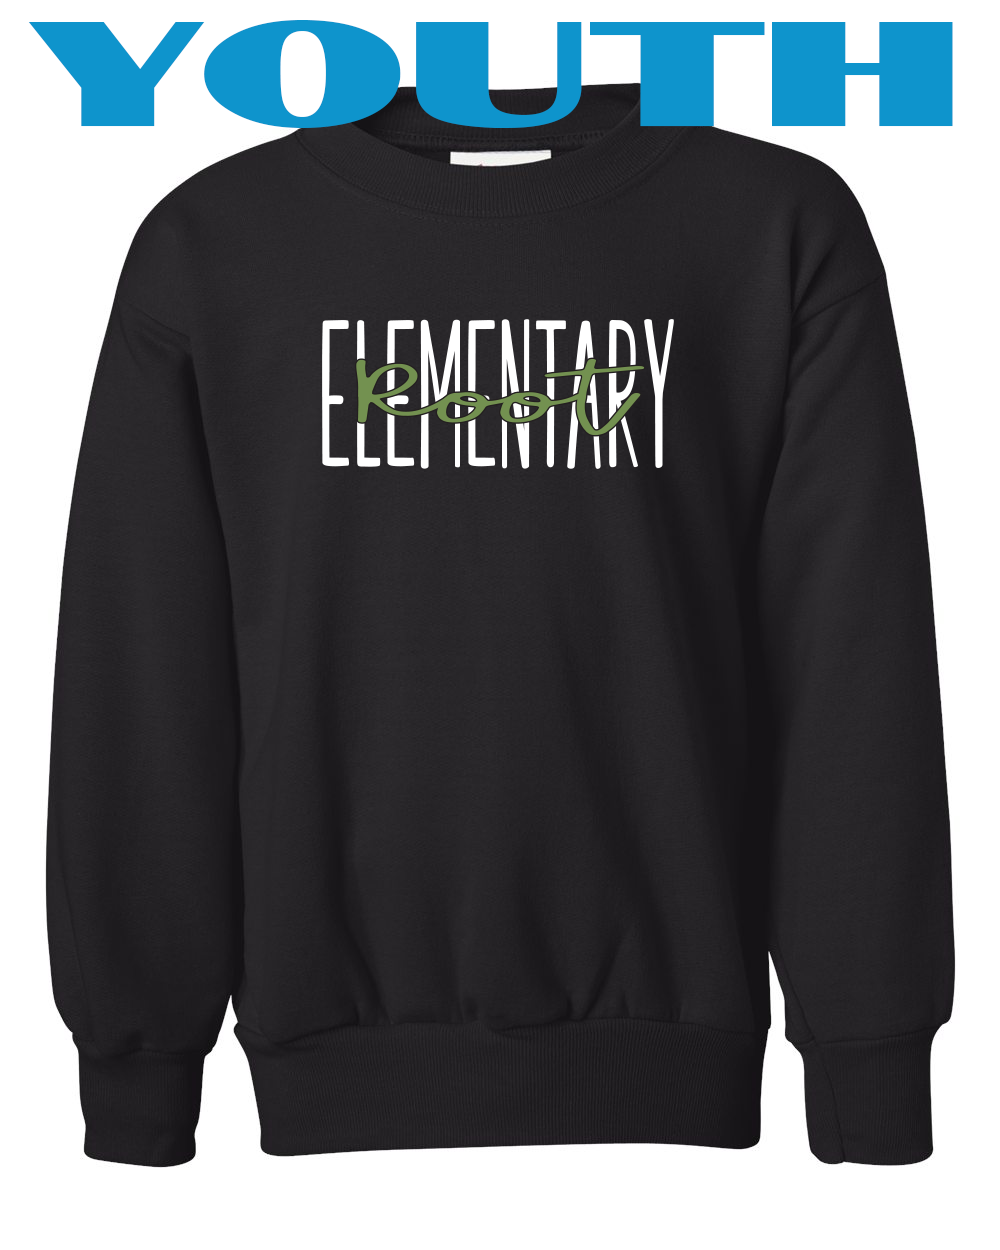 YOUTH Root Elementary Sweatshirt 2021-2022